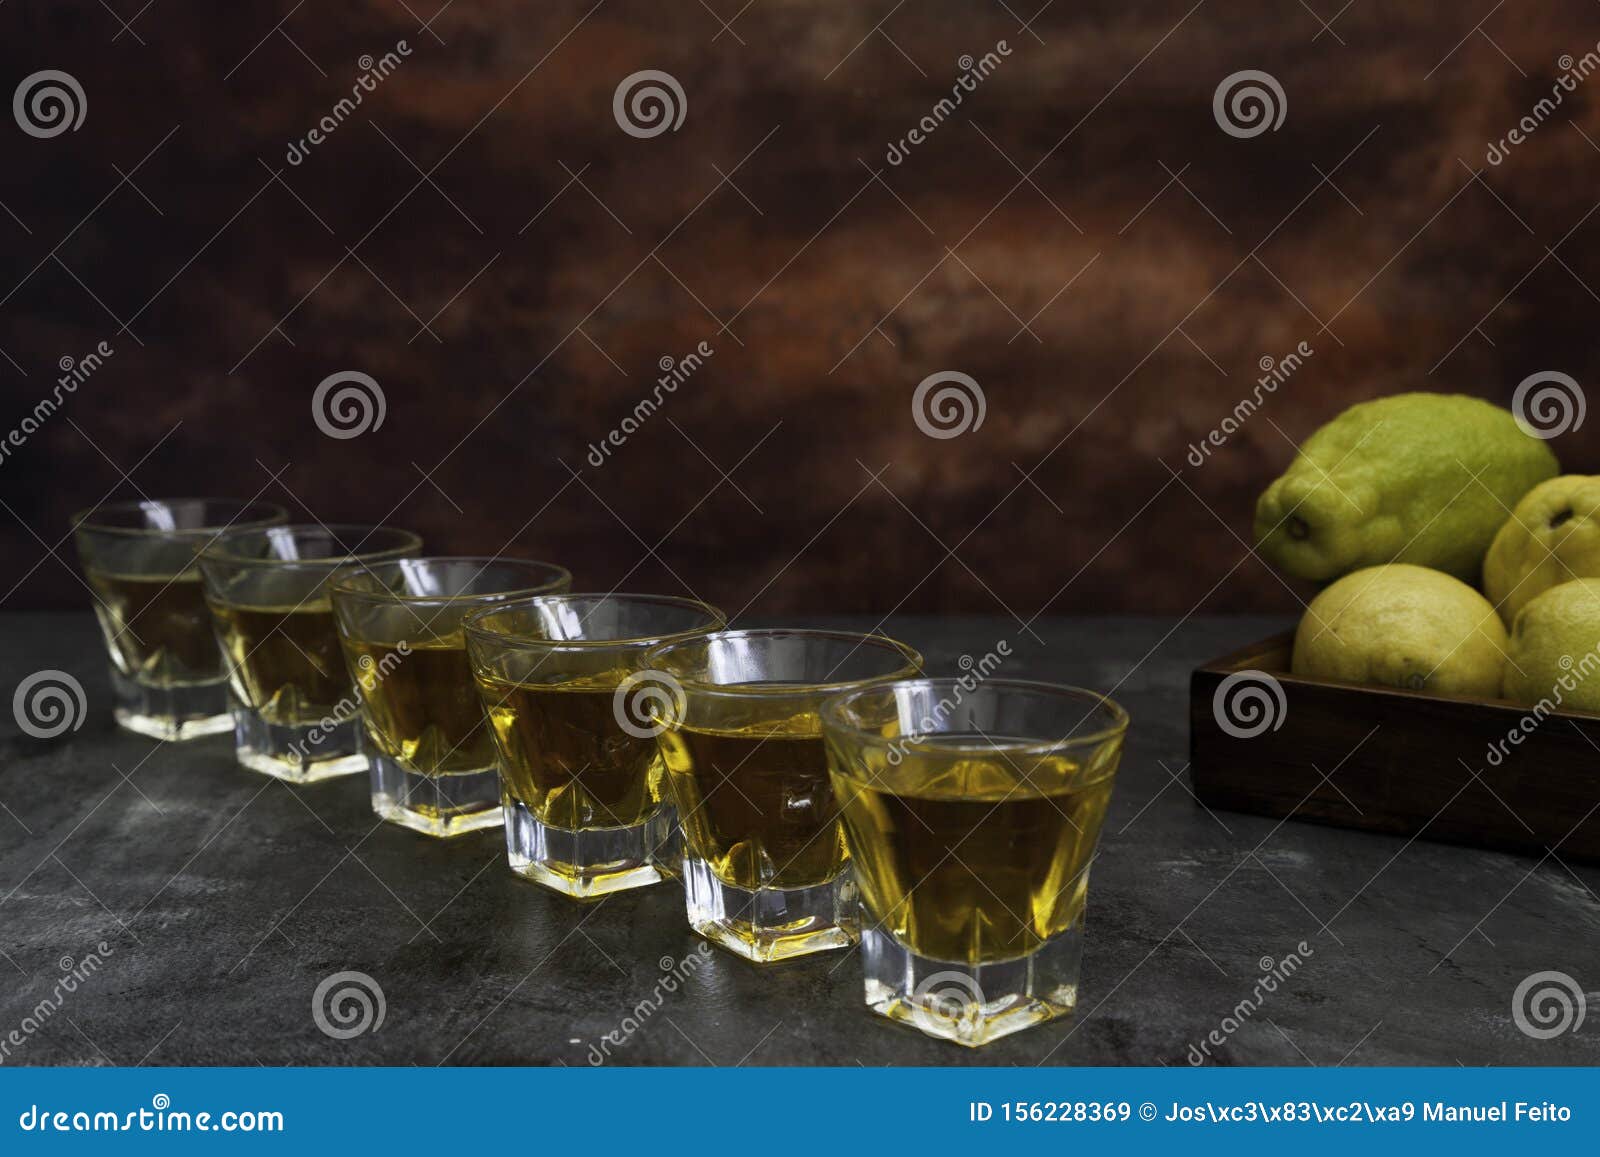 six tequila shots and lemon basquet